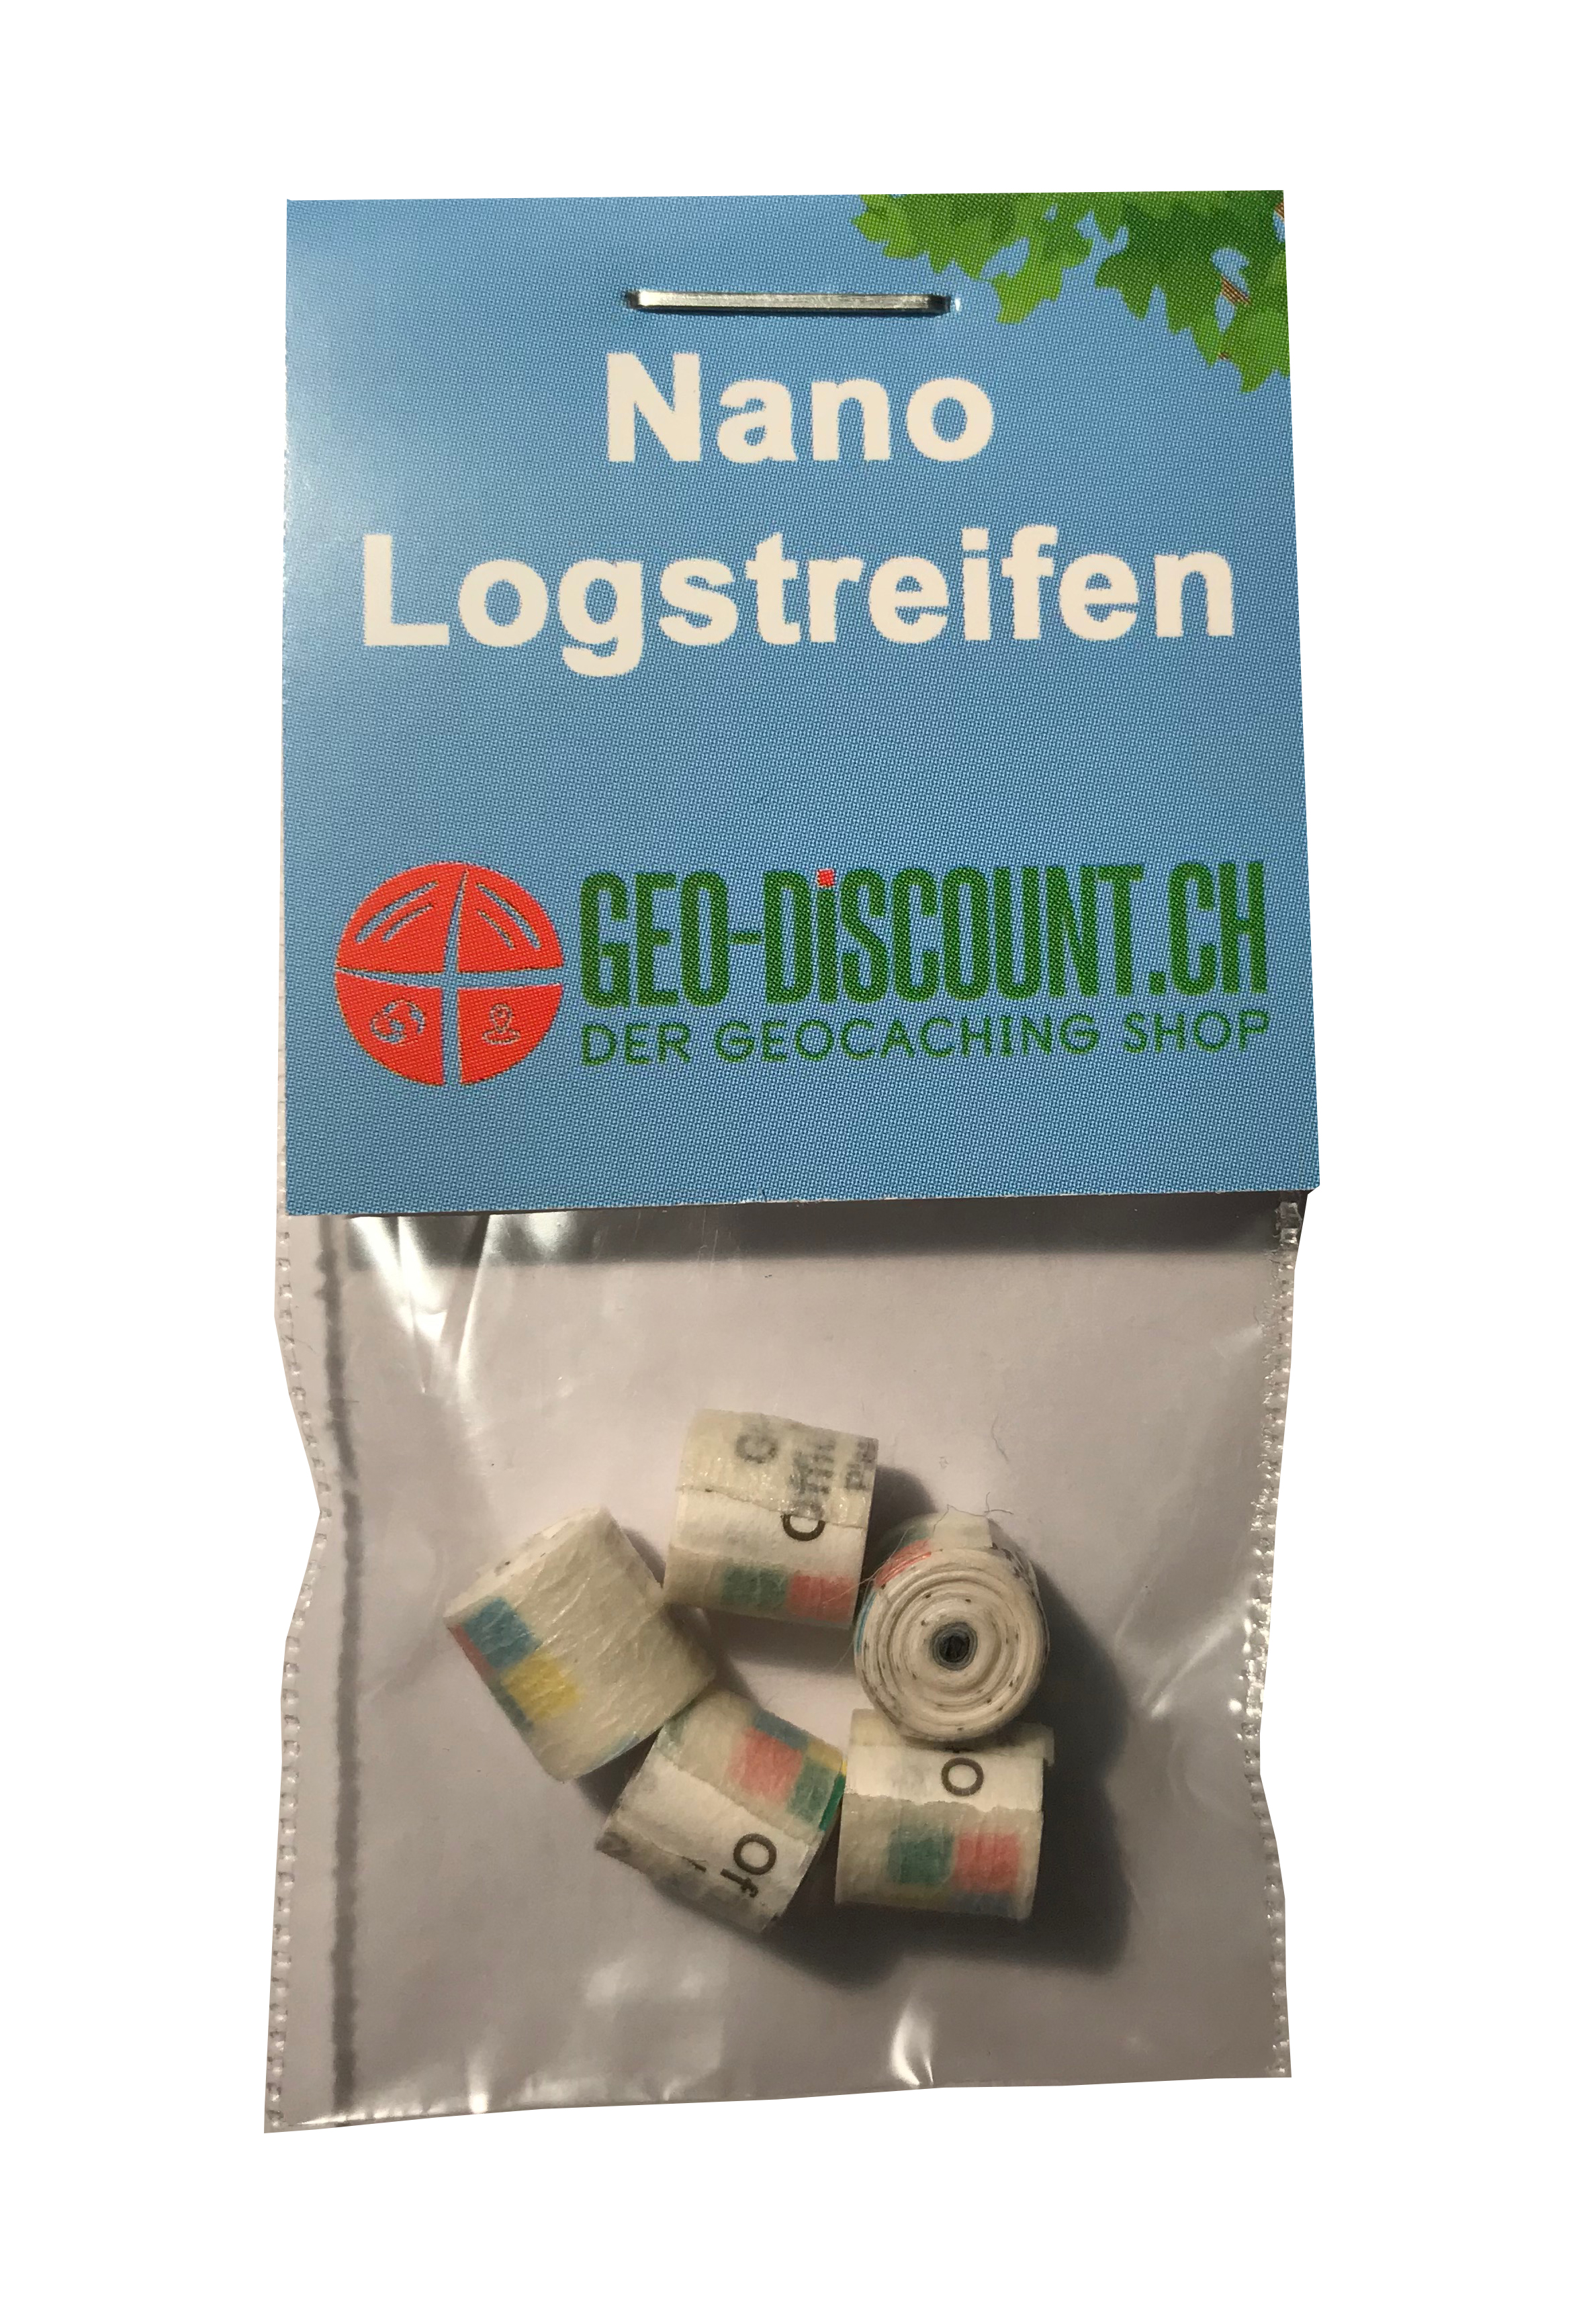 5 x Nano Logstreifen Geocaching Mini Logbuch gerollt magnetische Nanos Hutmutter 